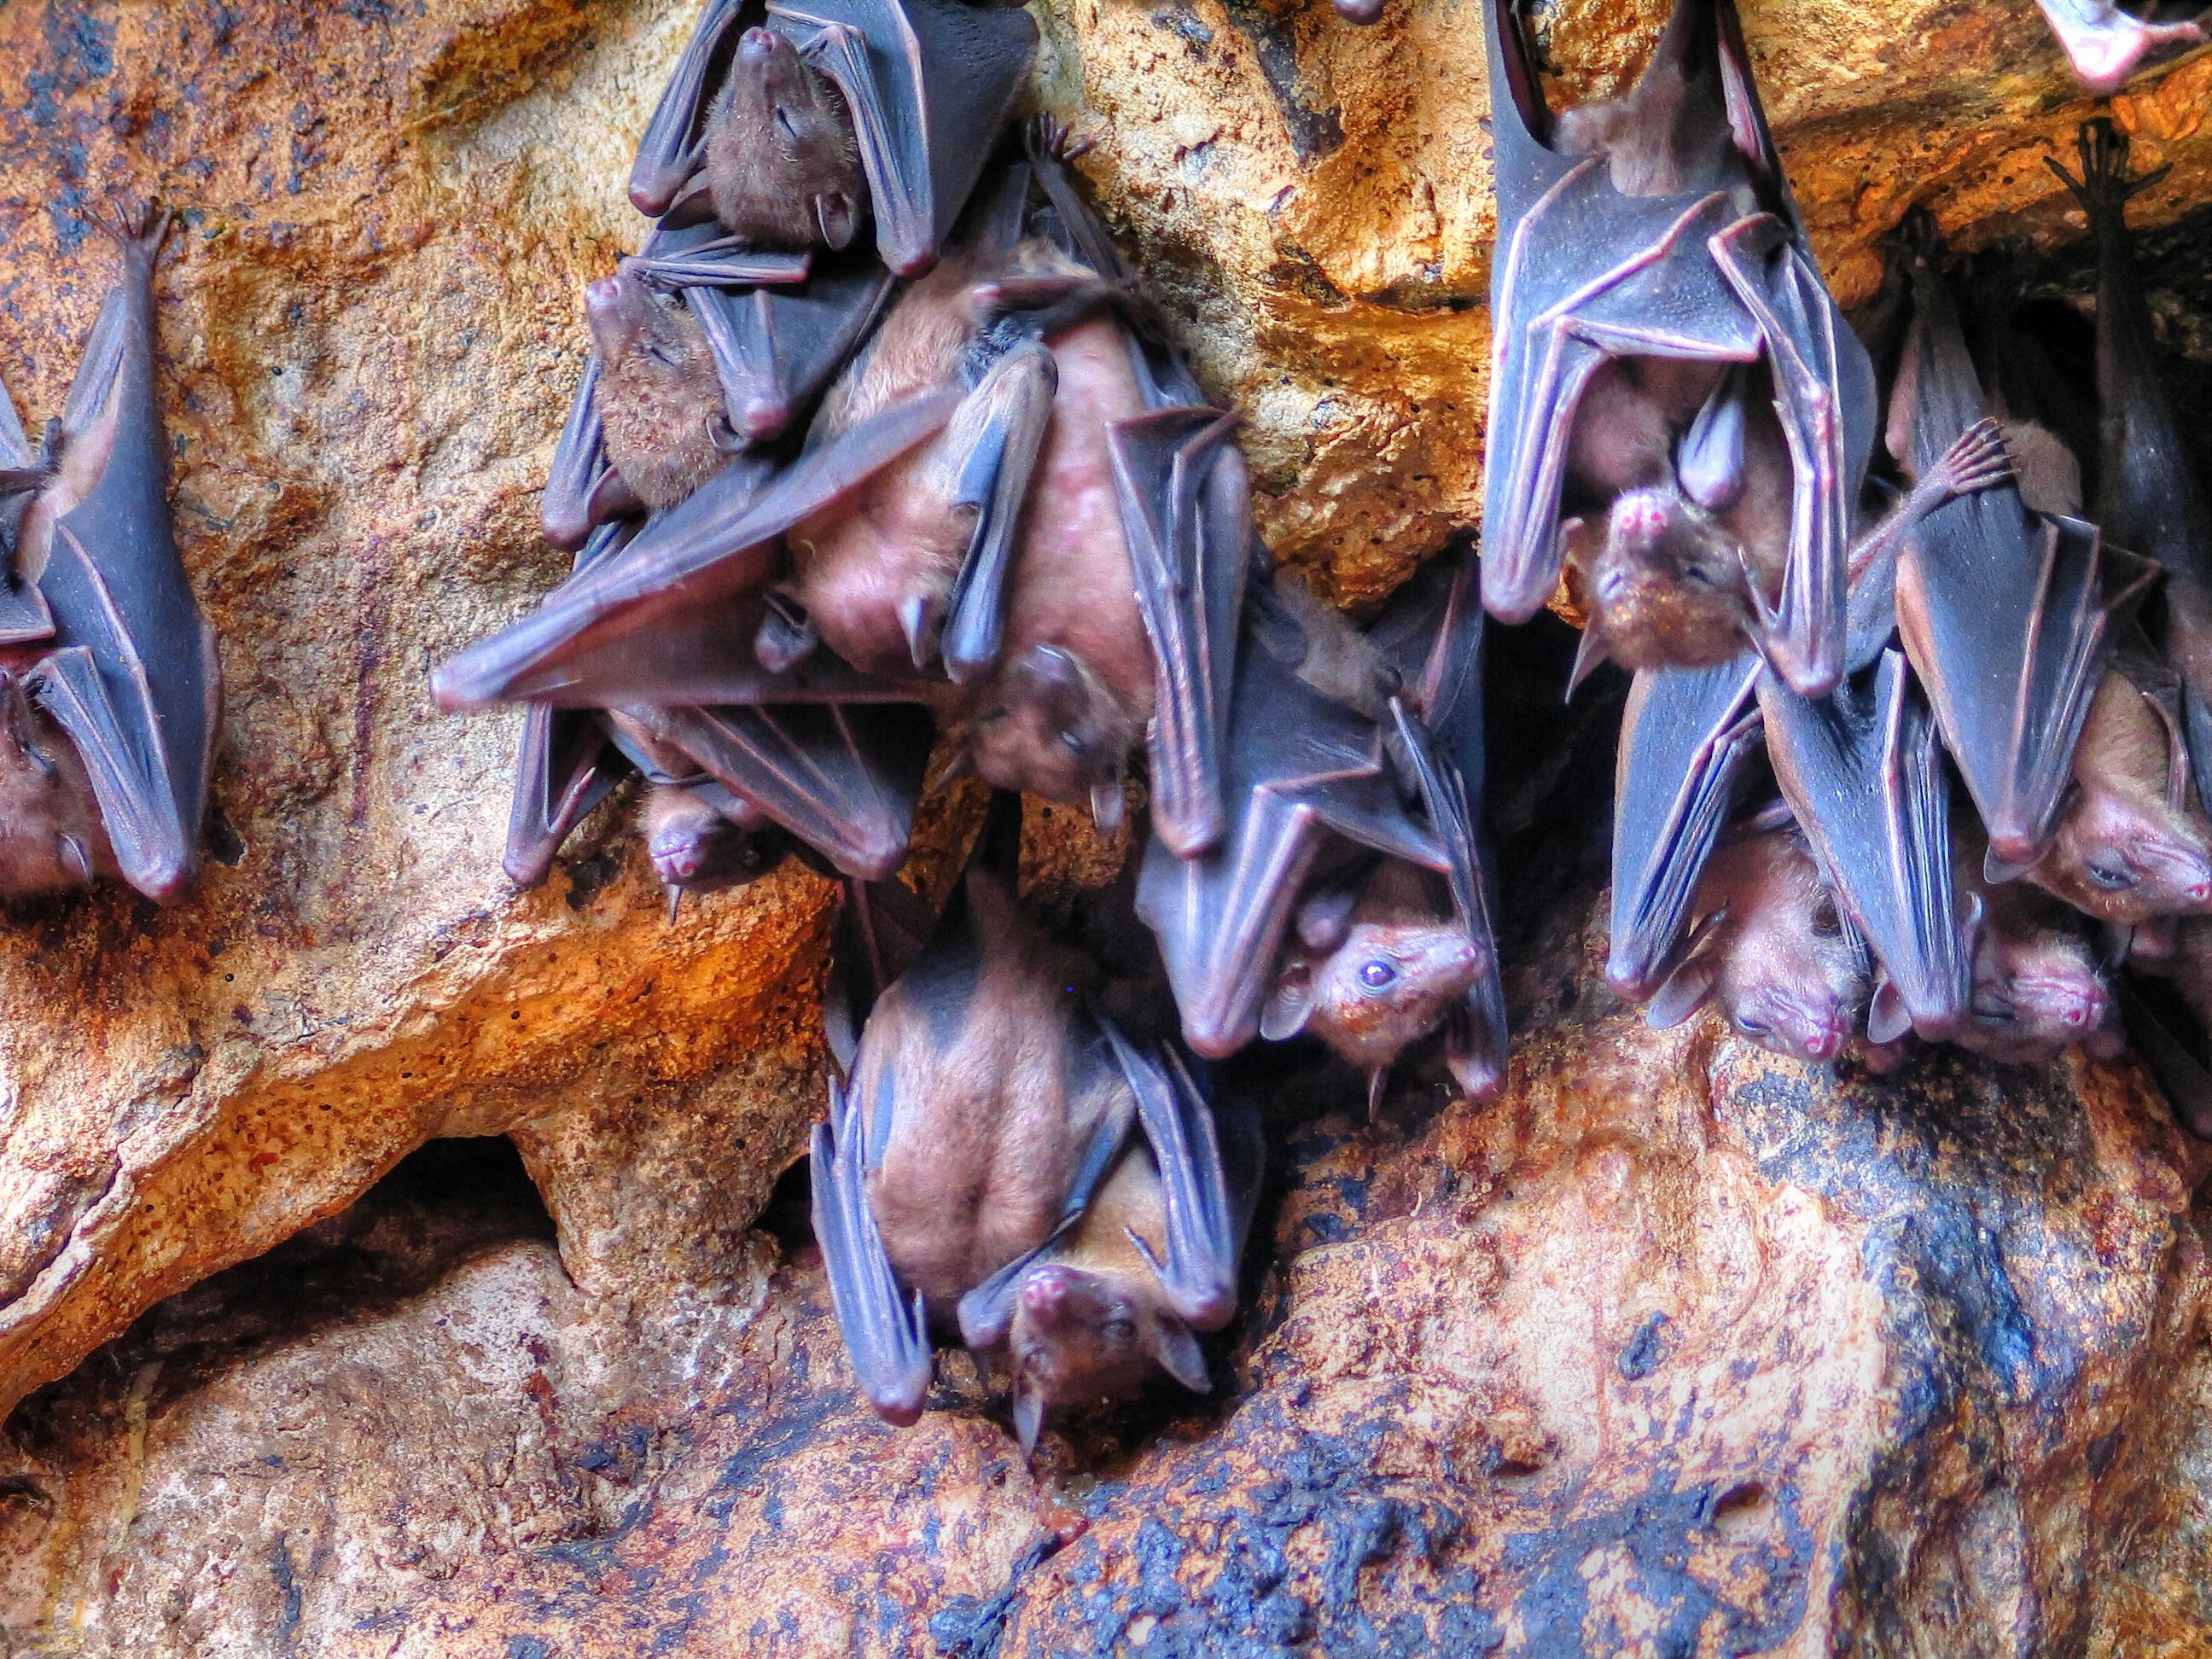 Bat Facts and Photos - Animal Fun Facts - Bat Appreciation Day